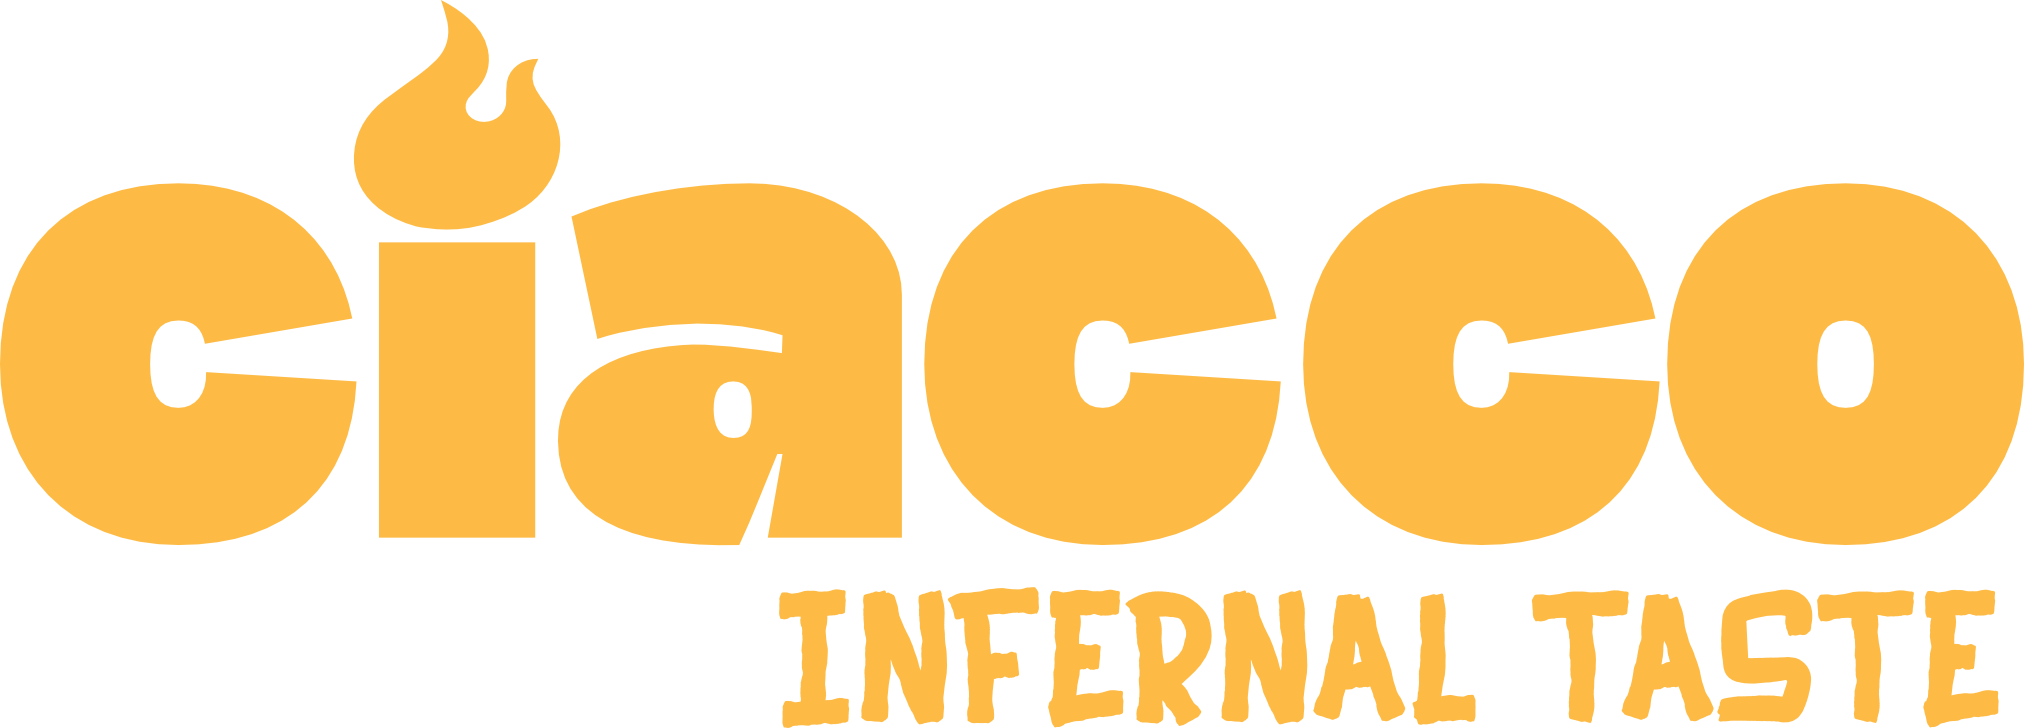 Ciacco – Infernal Taste | Infernal Taste